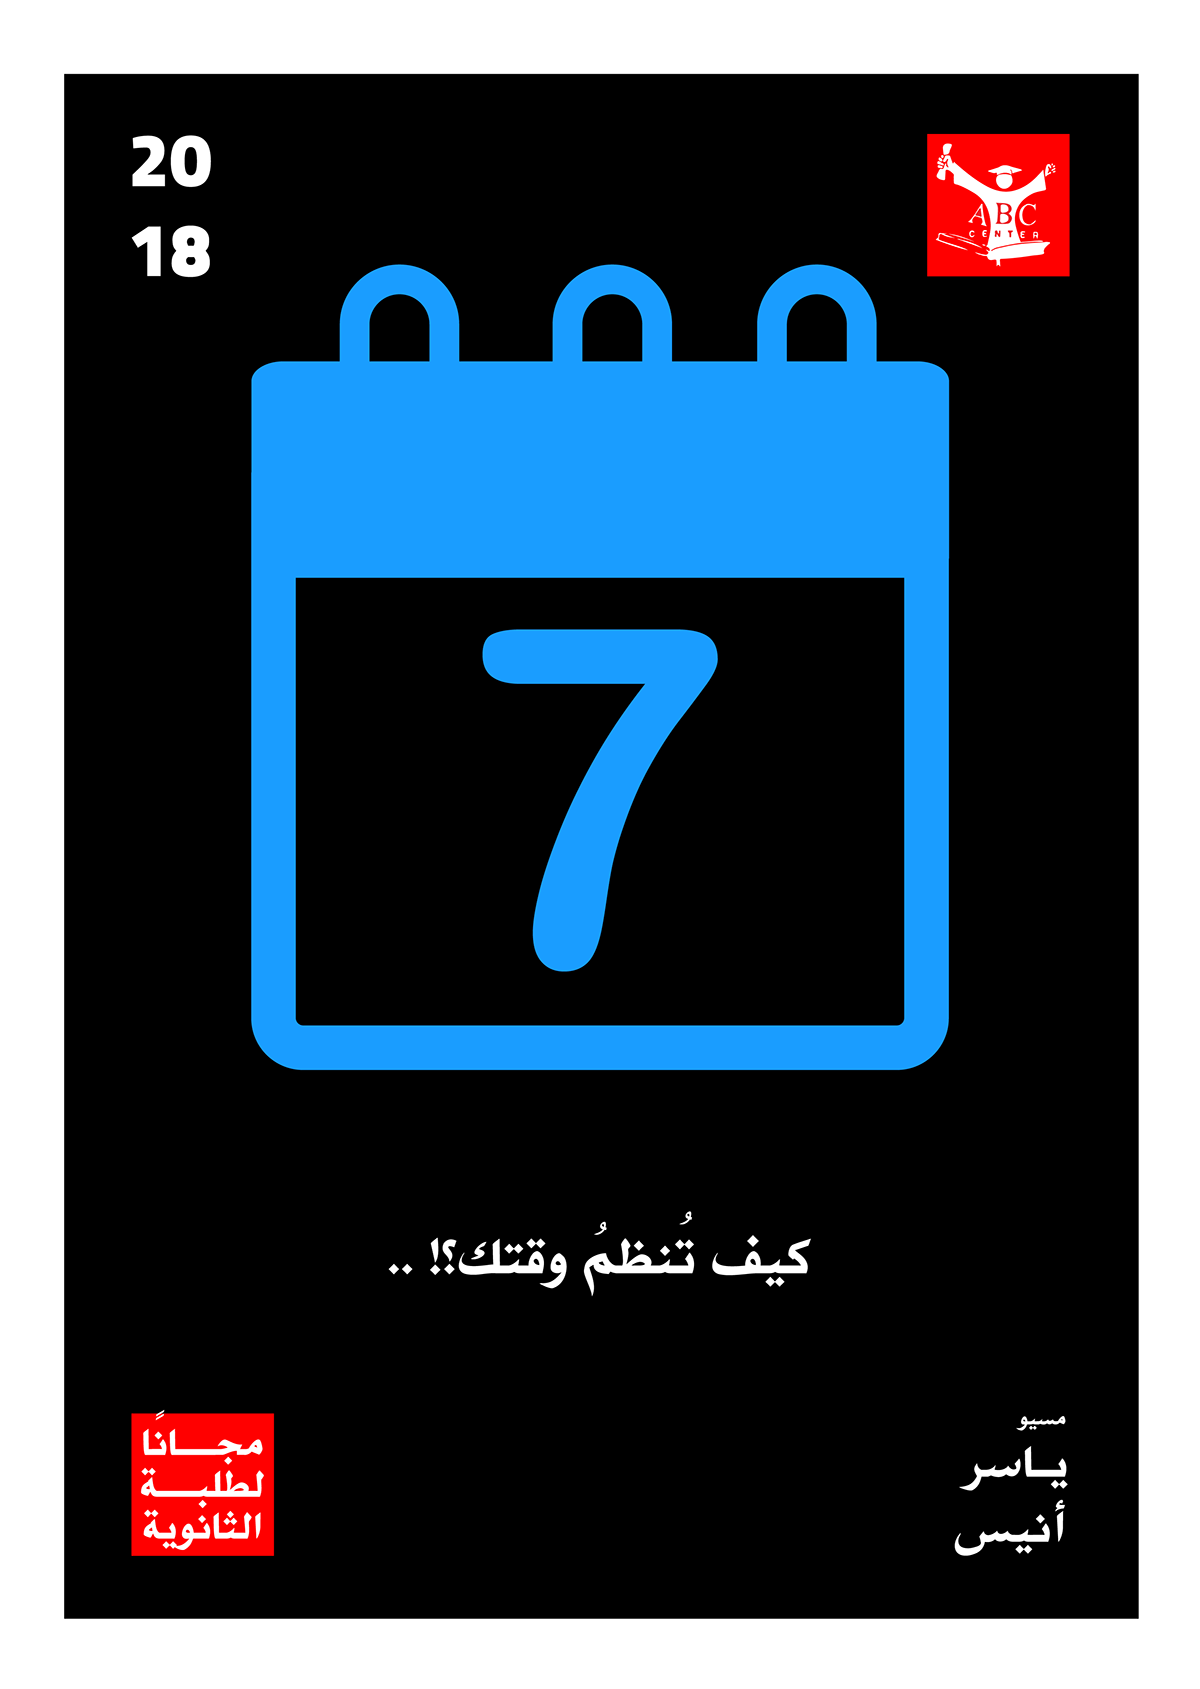 Arabic Typography Poster Poster Design Advertising  icon design  Guides Master Alkhimiayiyu